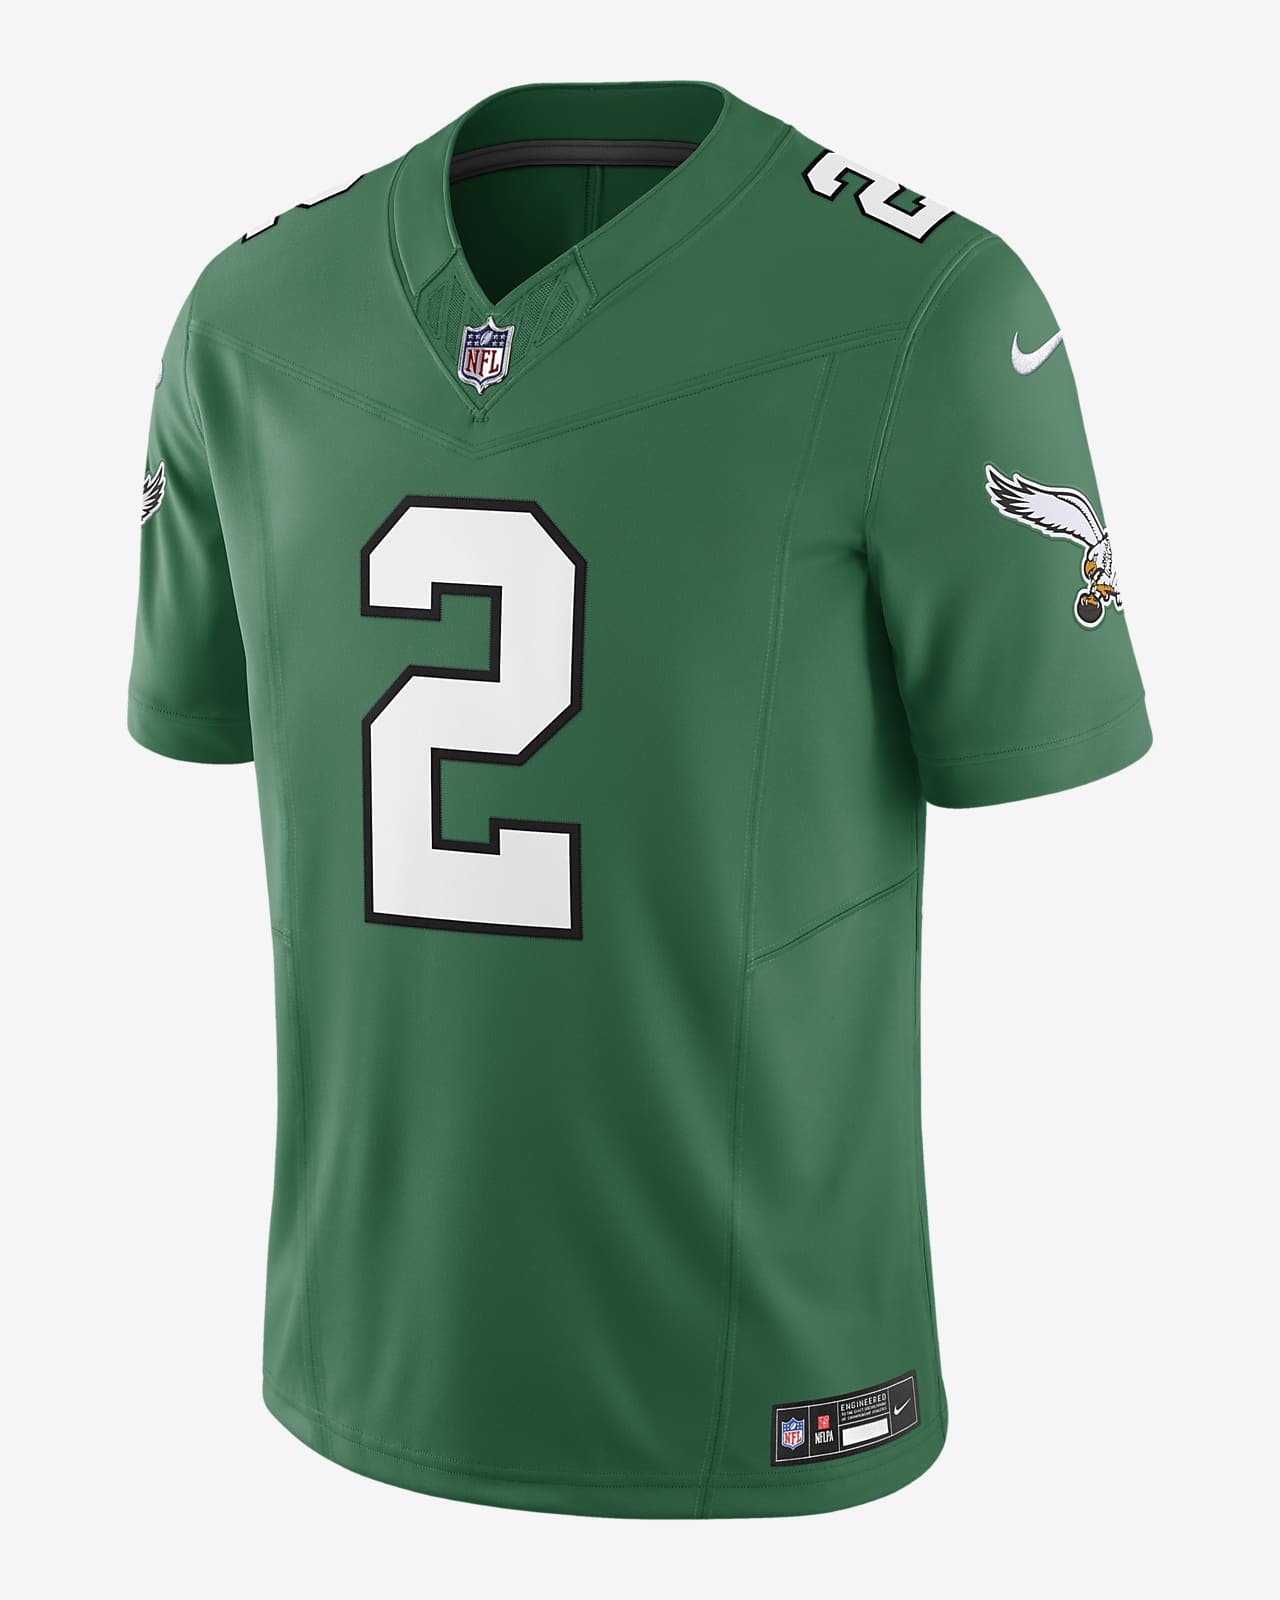 Jersey de fútbol americano Nike Dri-FIT de la NFL Limited para hombre Darius Slay Jr. Philadelphia Eagles